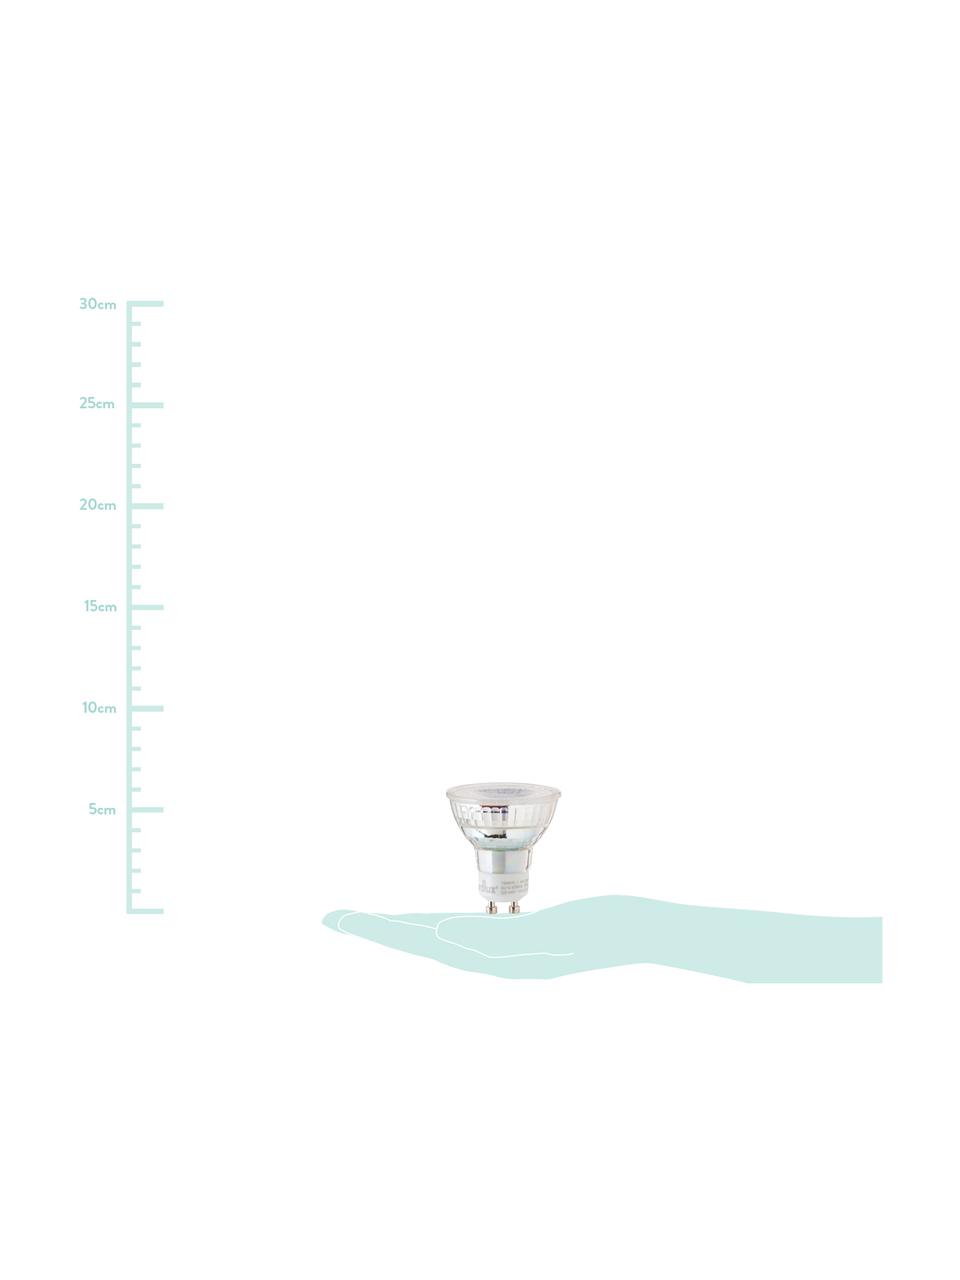 GU10 Leuchtmittel, 4W, warmweiss, 5 Stück, Leuchtmittelschirm: Glas, Leuchtmittelfassung: Aluminium, Transparent, Ø 5 x H 6 cm